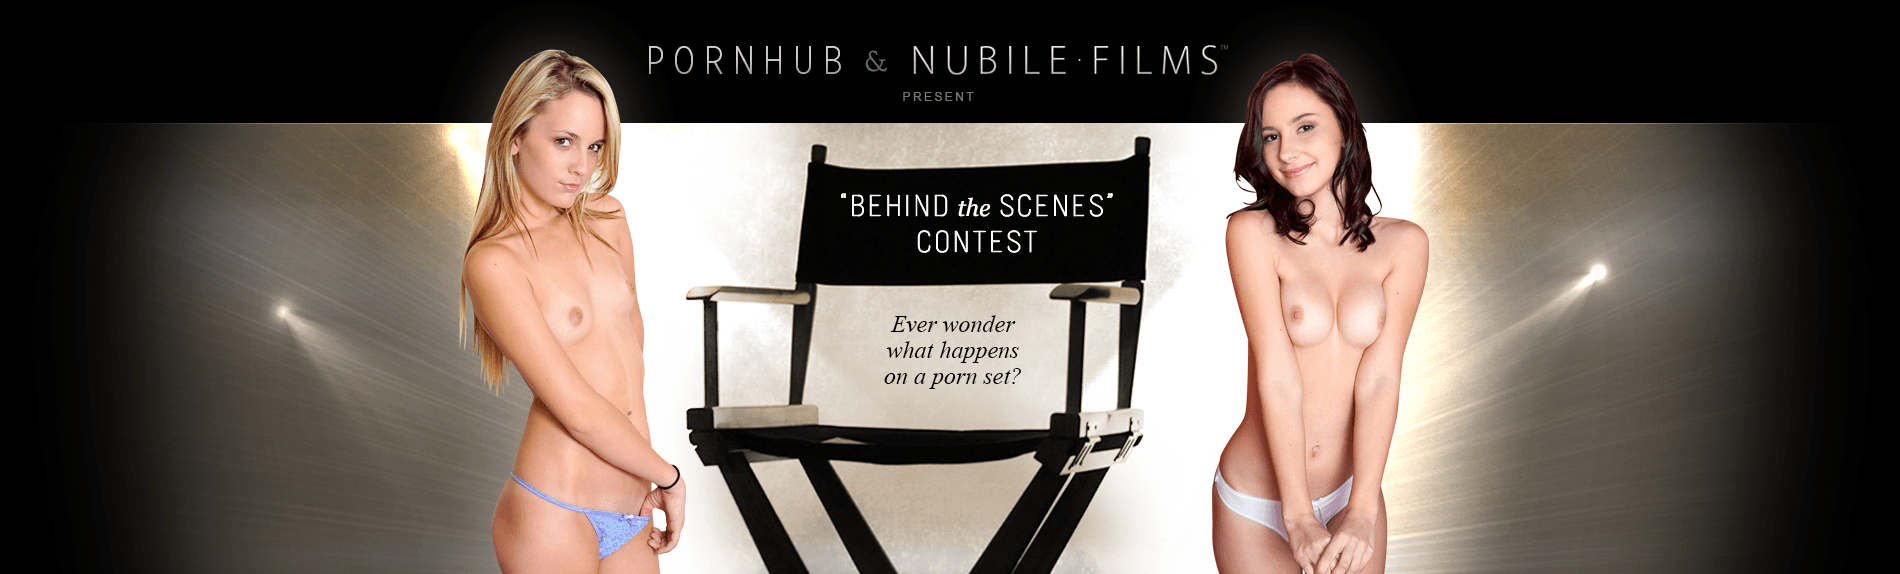 Pornhub & Nubile Films Present Behind The Scenes contest